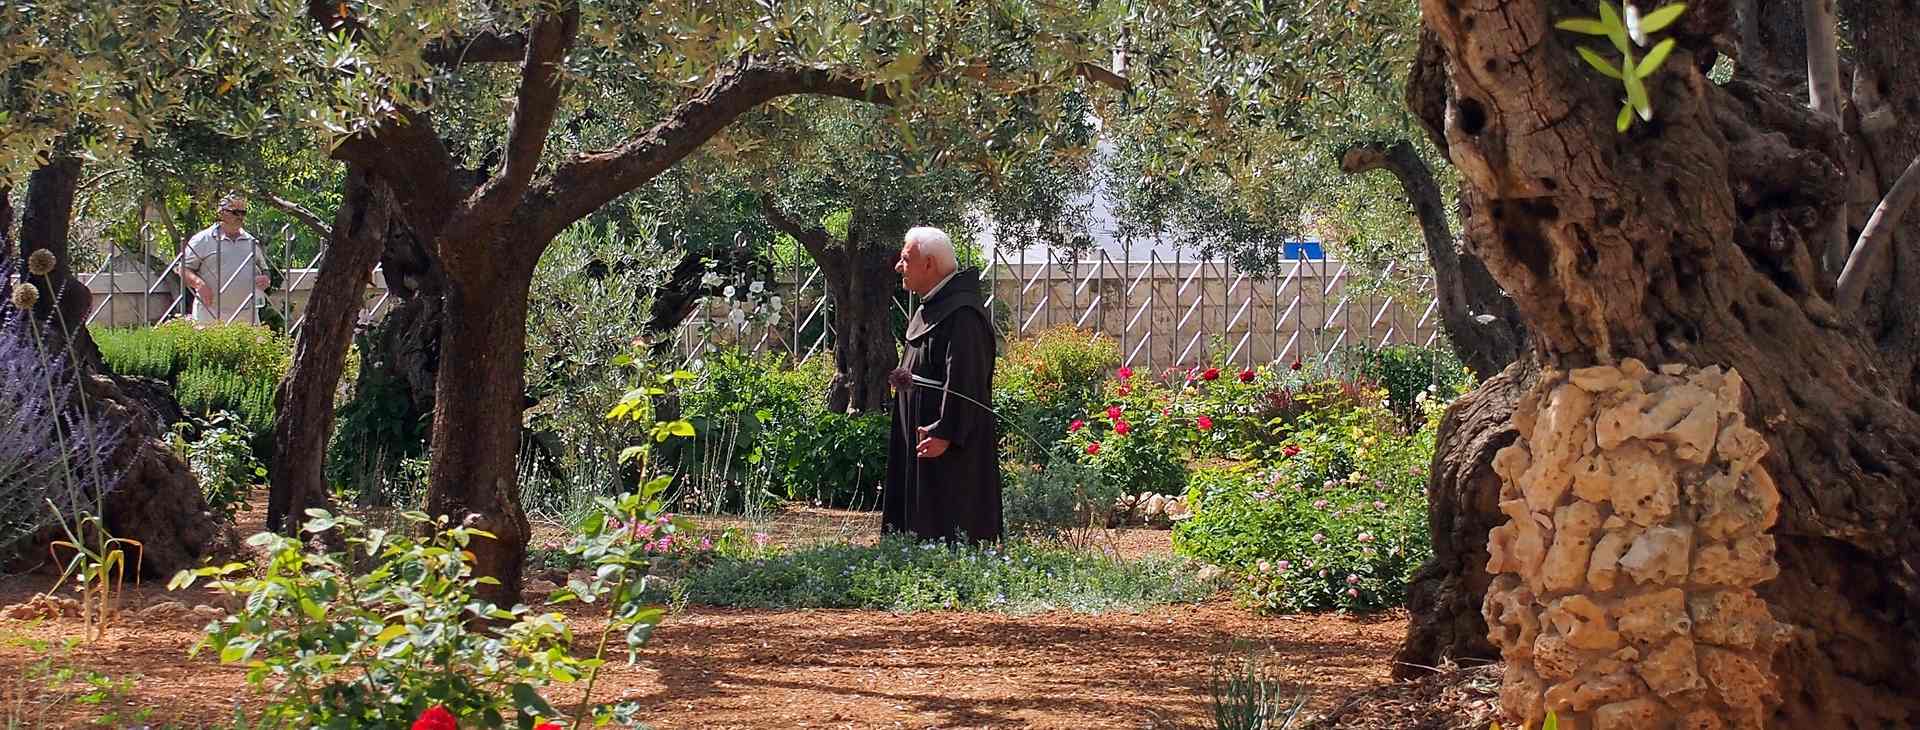 photo of The Garden of Olives - Gethsemane